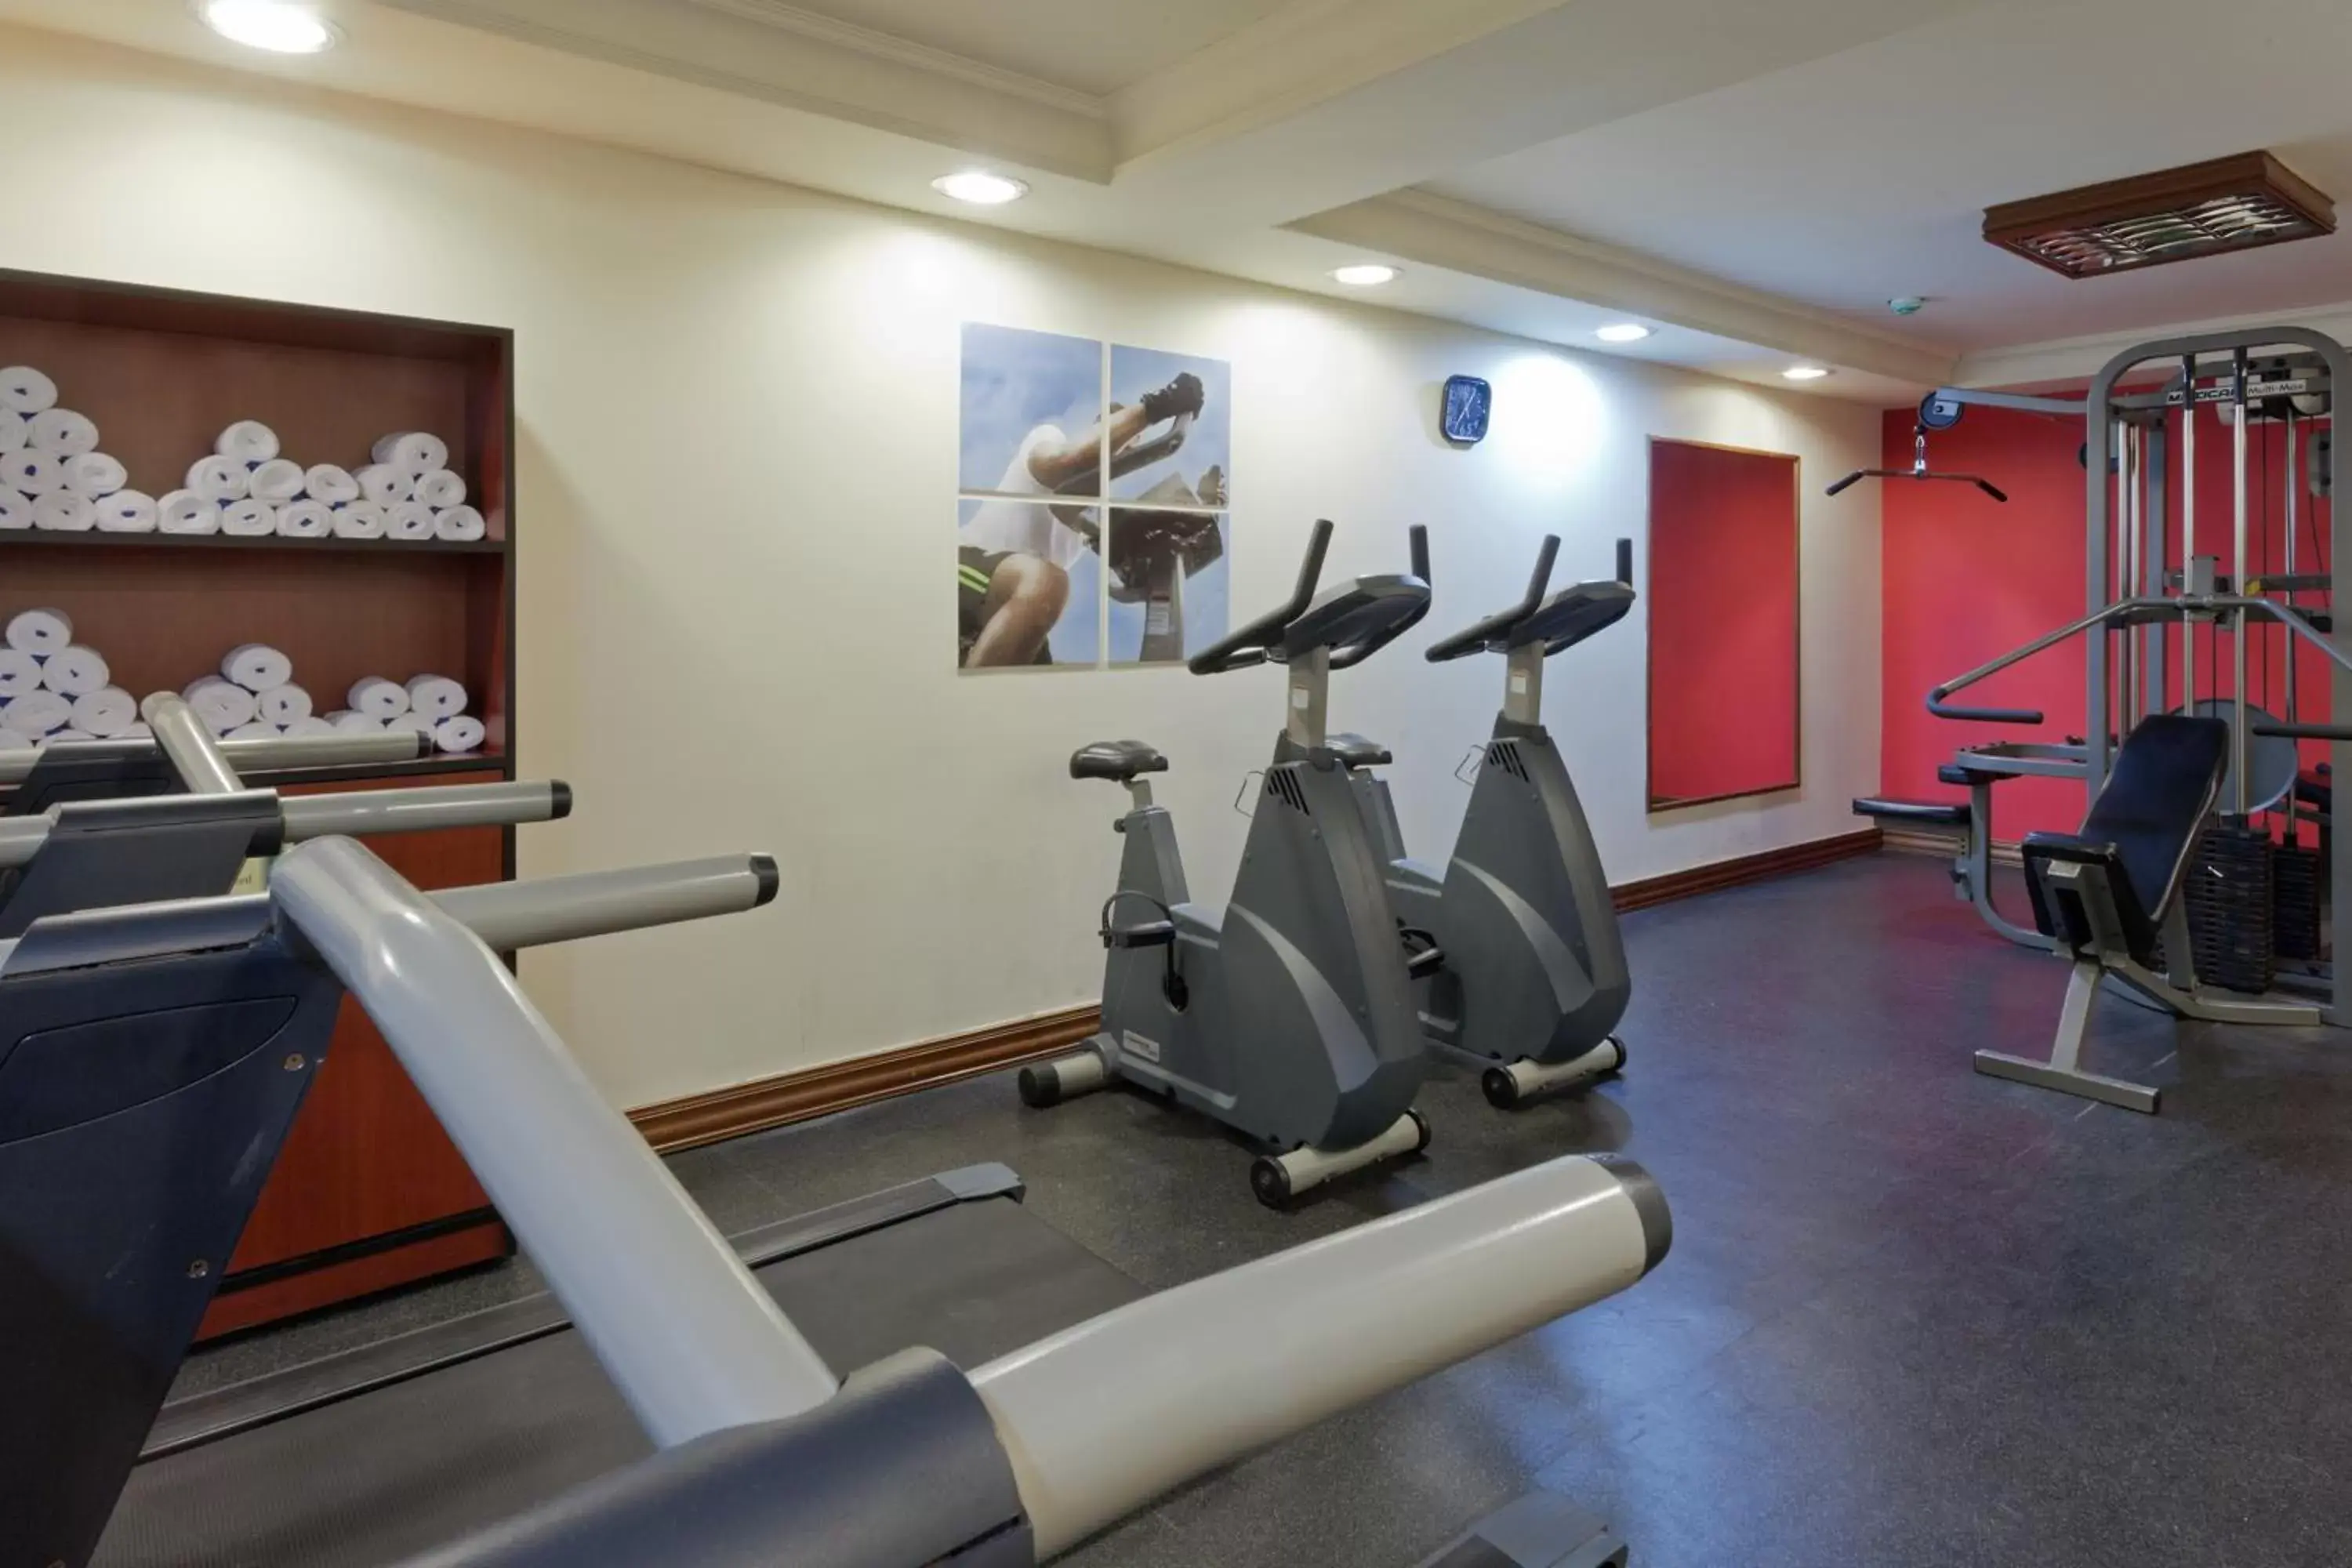 Fitness centre/facilities, Fitness Center/Facilities in Best Western El Dorado Panama Hotel